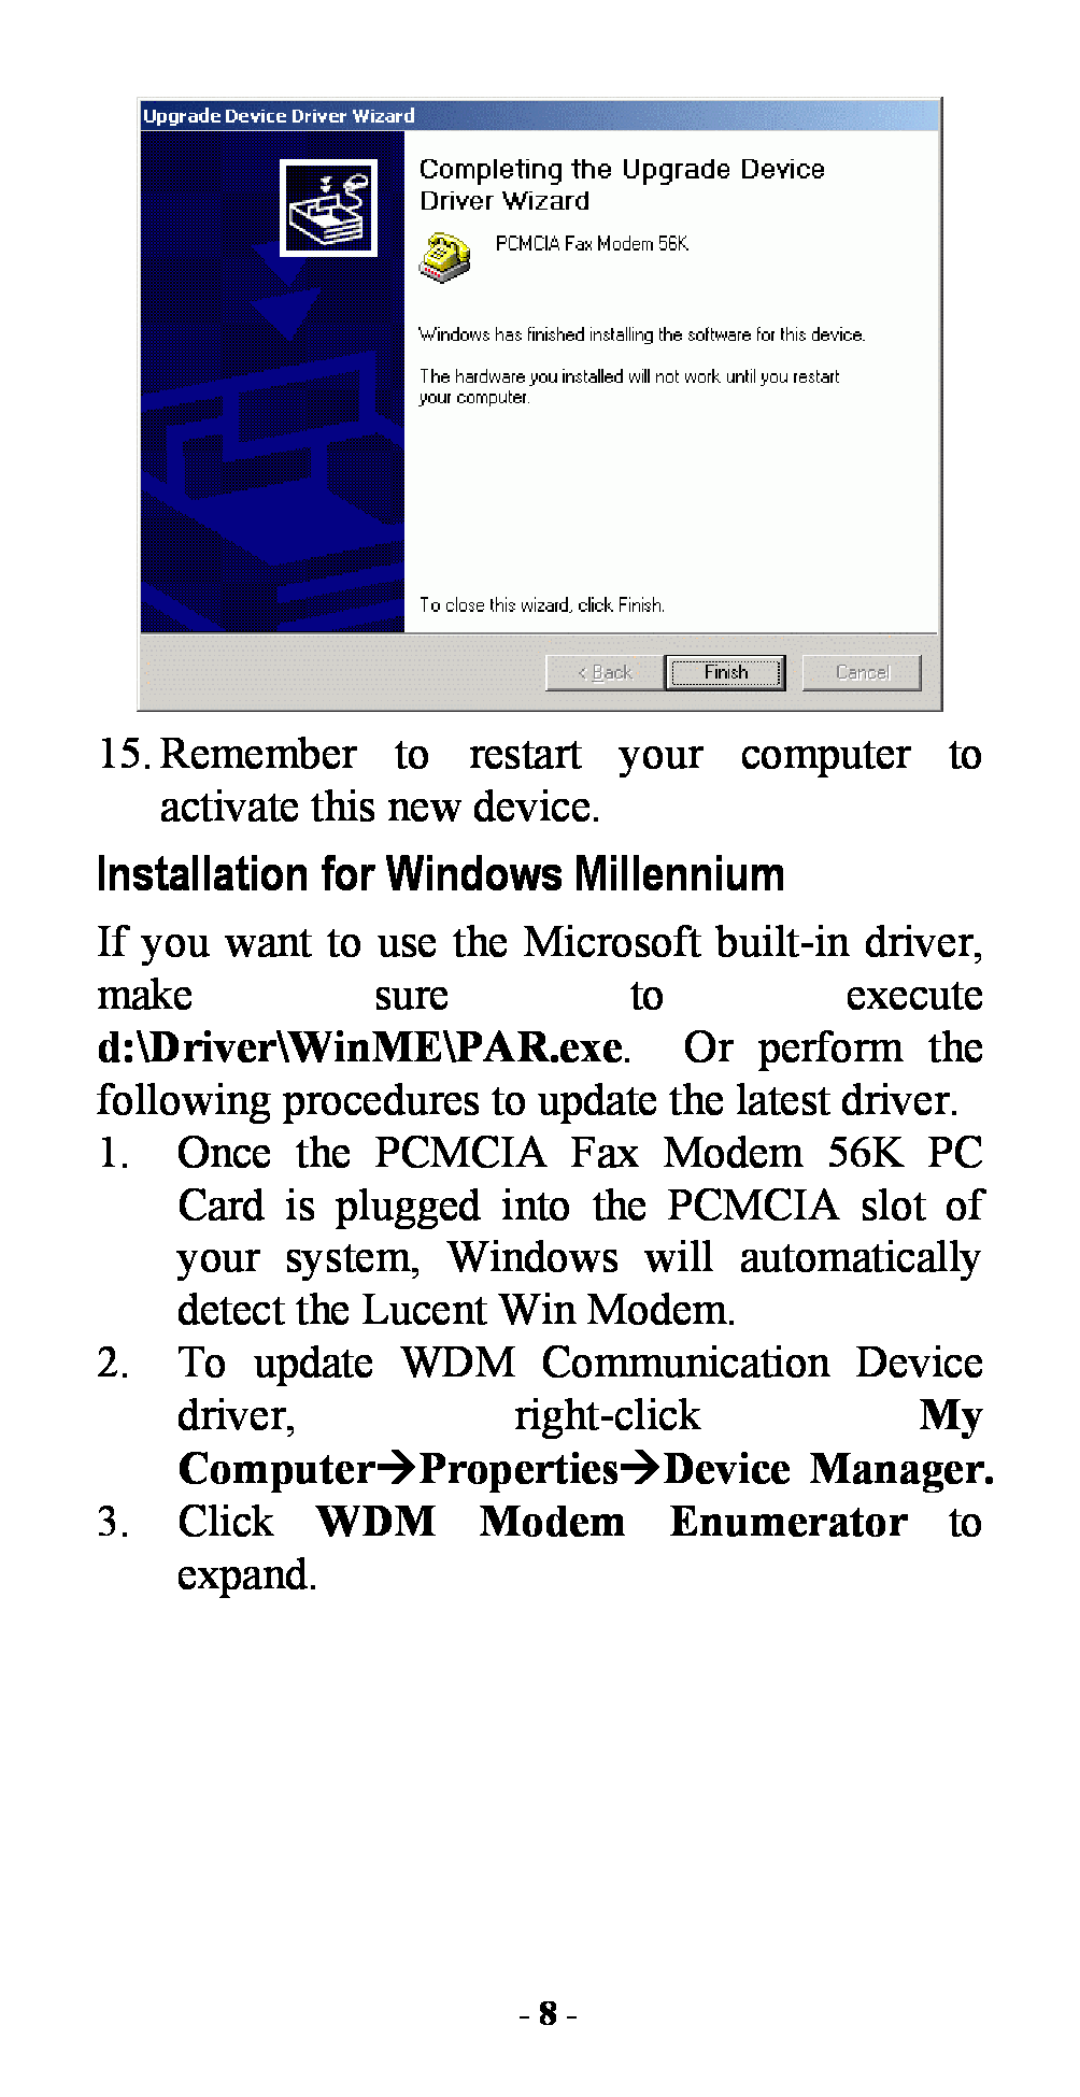 Abocom FM560C manual Installation for Windows Millennium, ComputerÆPropertiesÆDevice Manager 